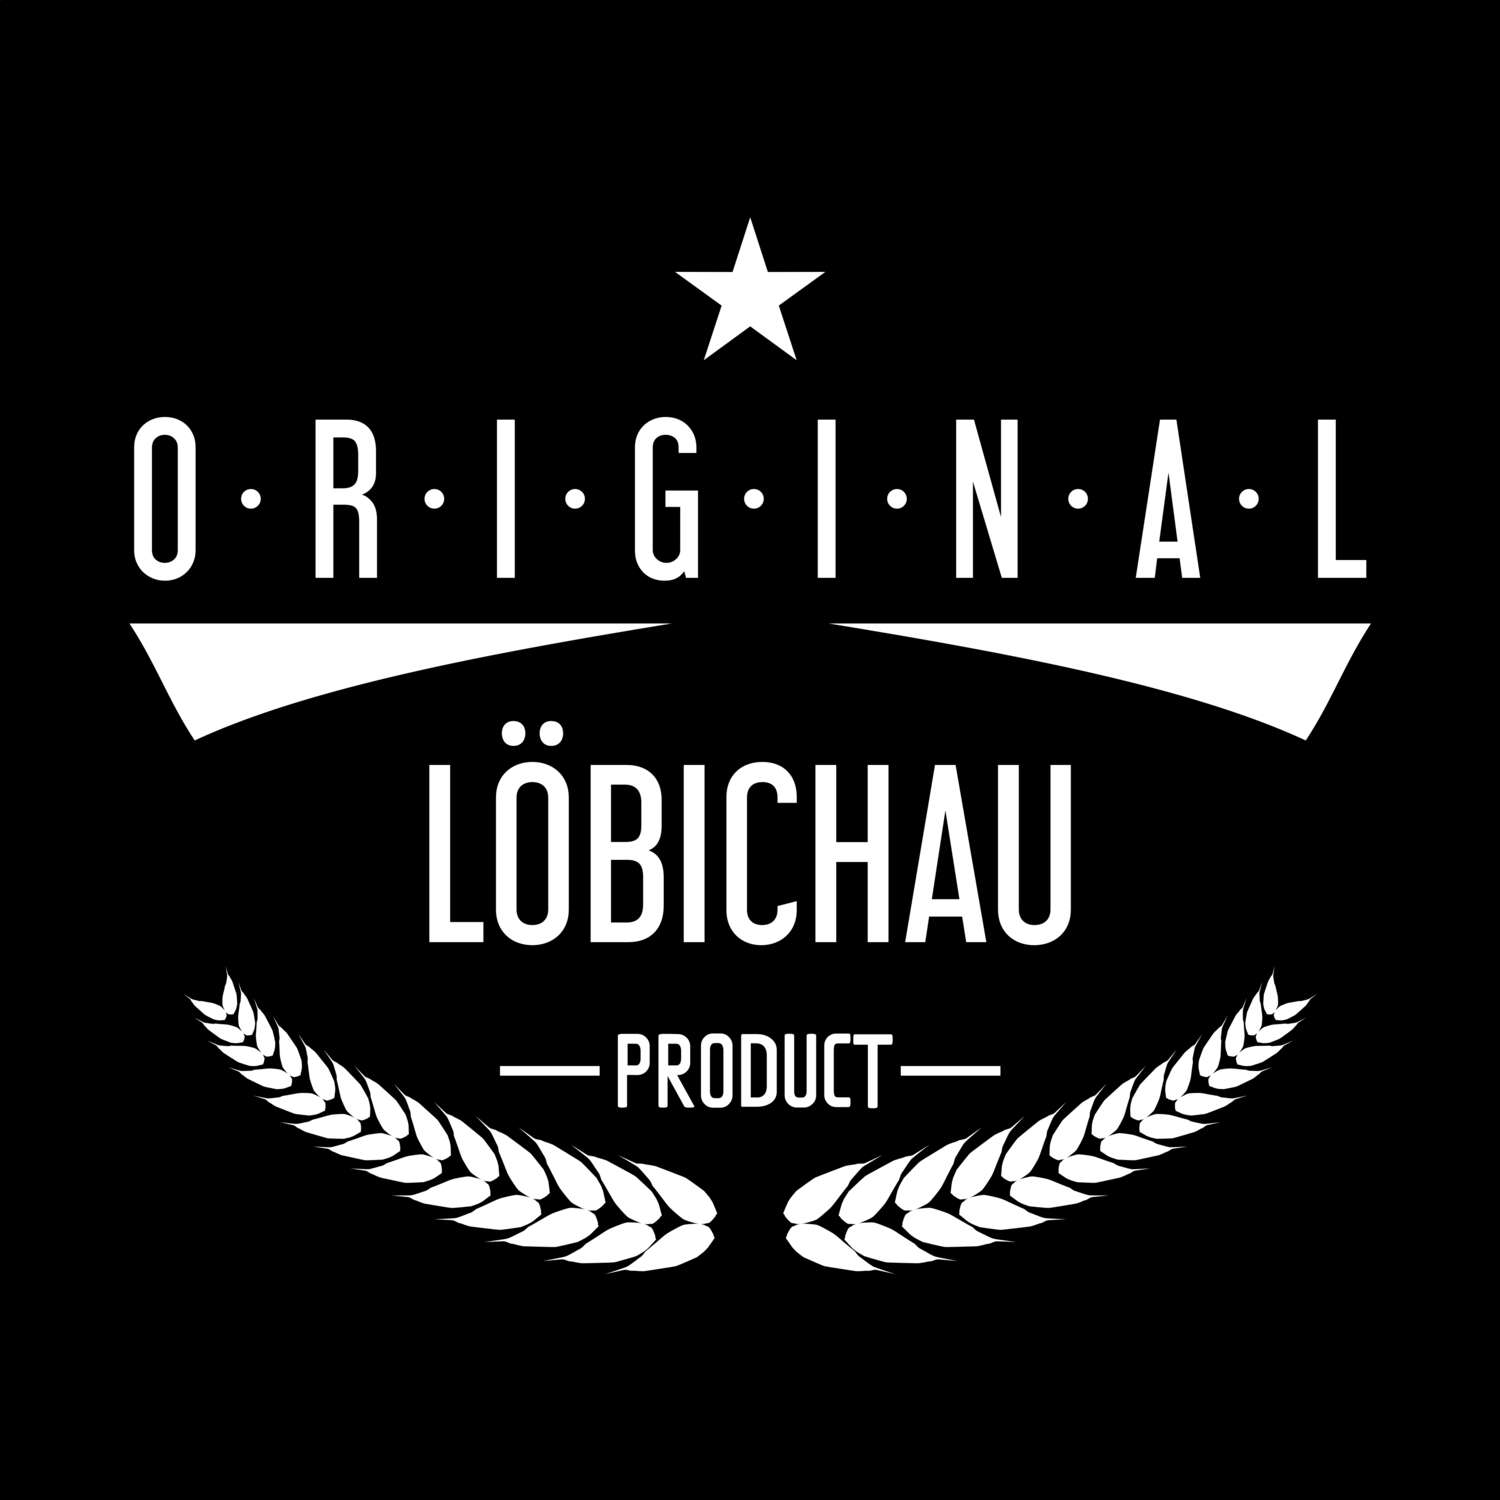 Löbichau T-Shirt »Original Product«